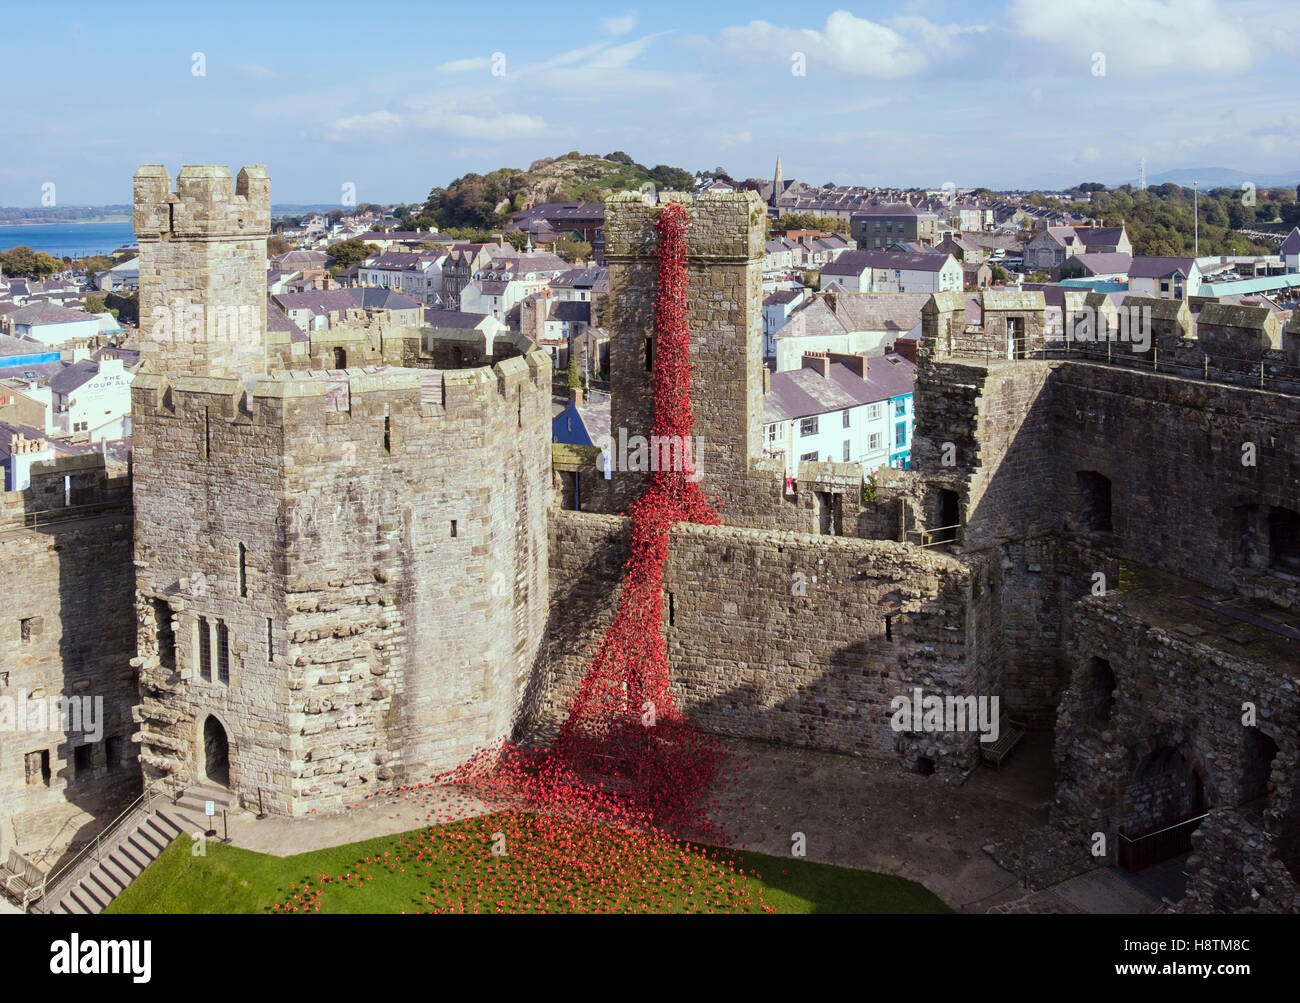 High view of Weeping Window art sculpture of ceramic red poppies in Caernarfon castle walls. Caernarfon Gwynedd North Wales UK Stock Photo